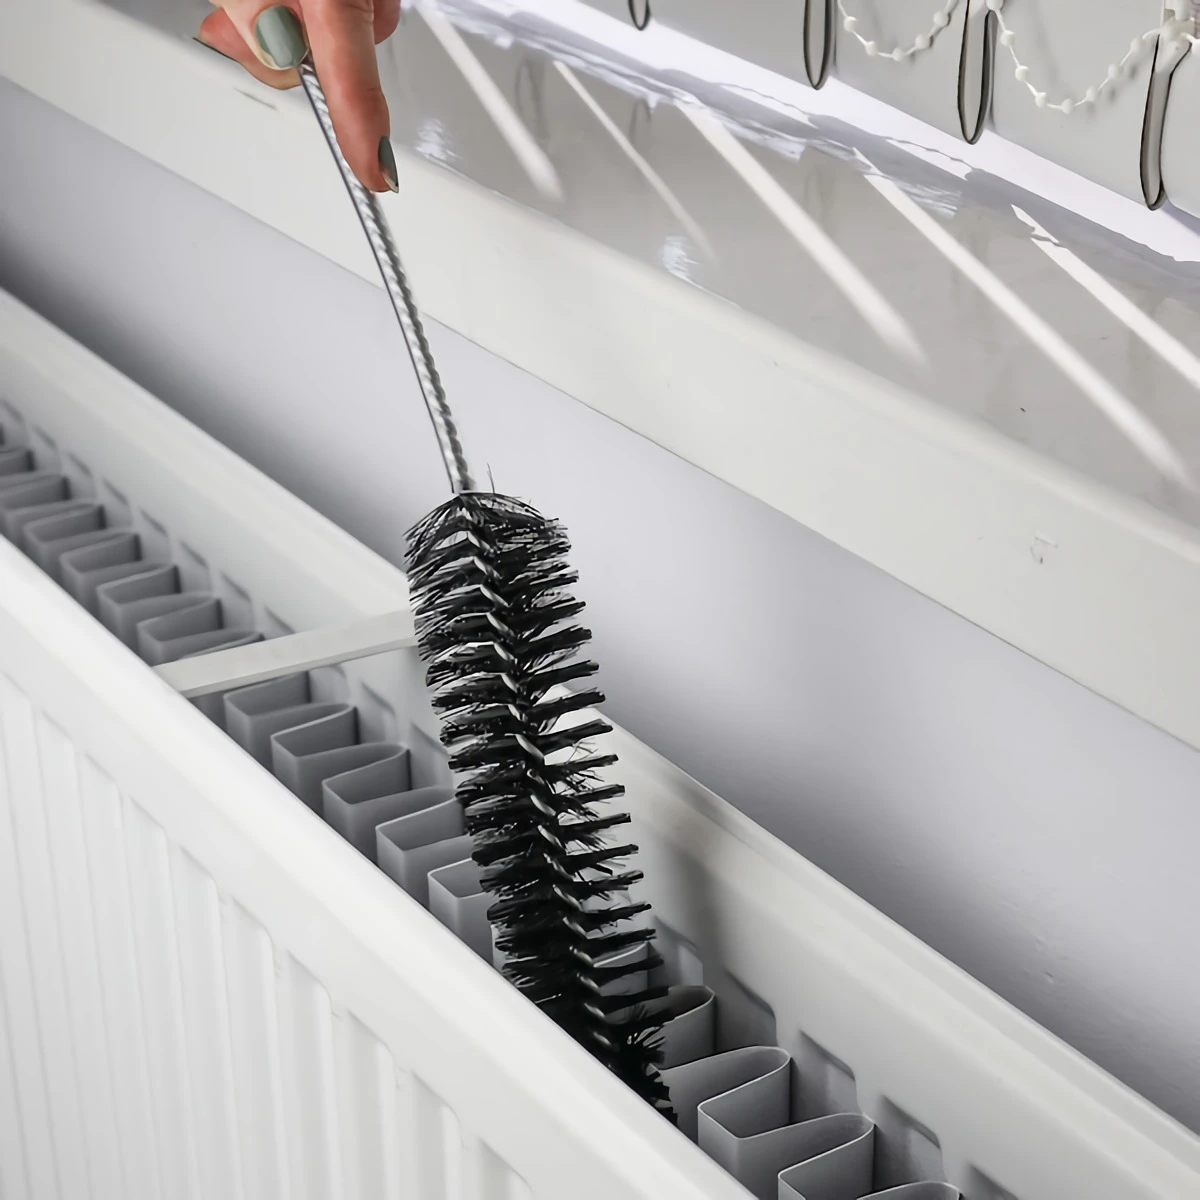 compact radiator cleaning brush